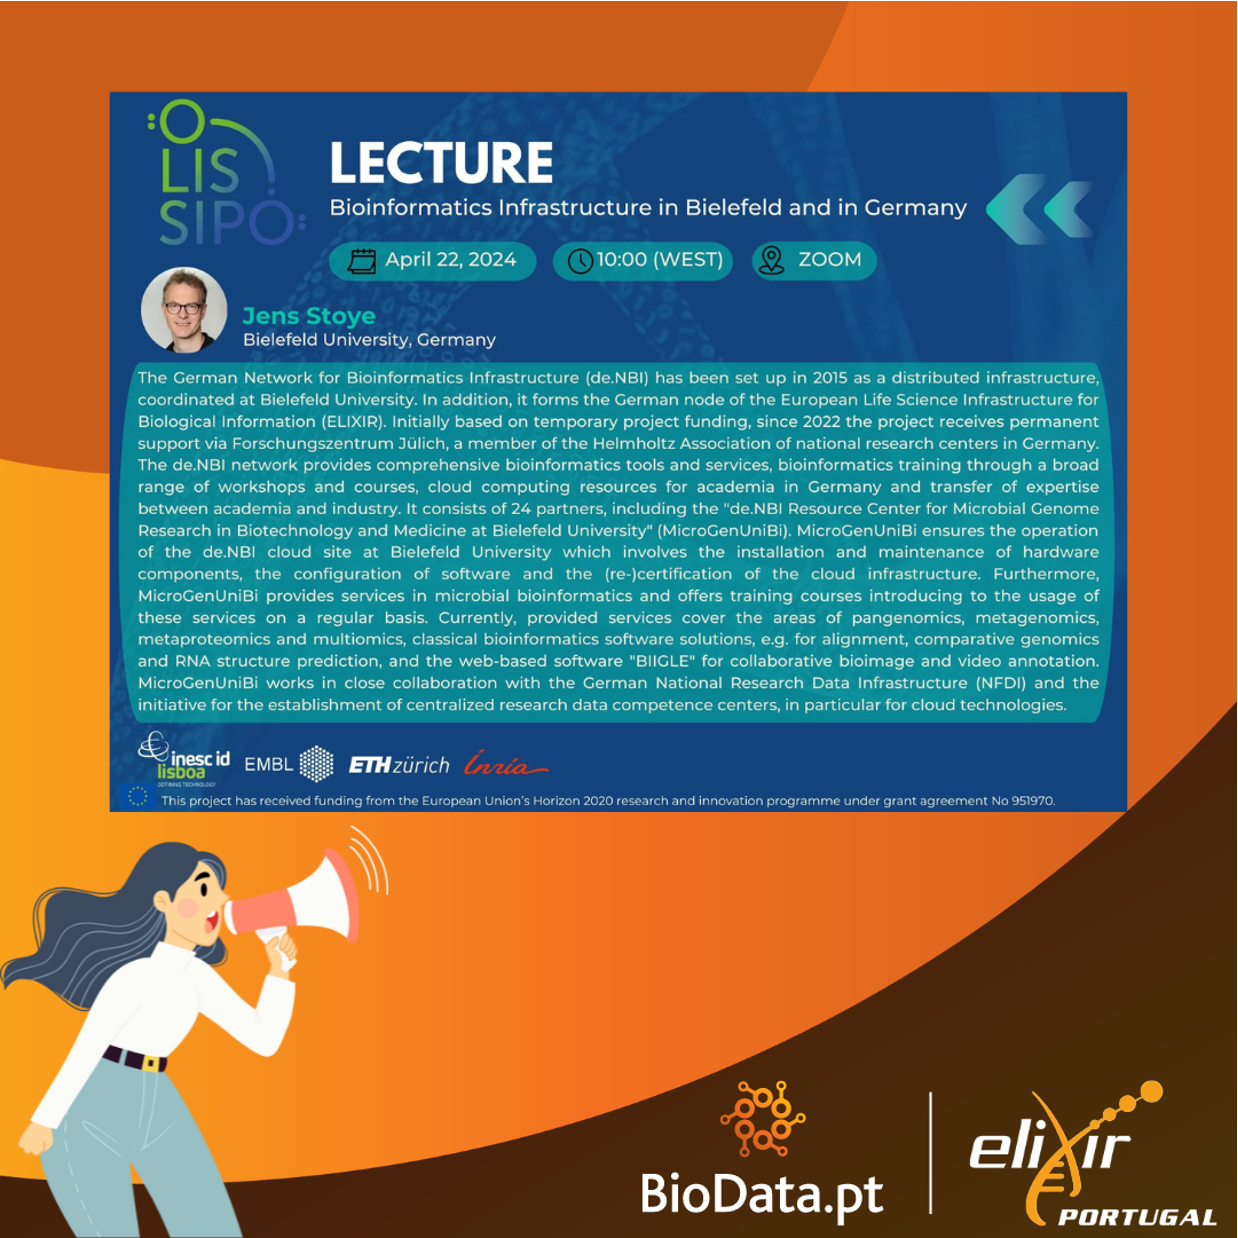 OLISSIPO Lecture: “Bioinformatics Infrastructure in Bielefeld and in Germany” by Jens Stoye (Bielefeld University)